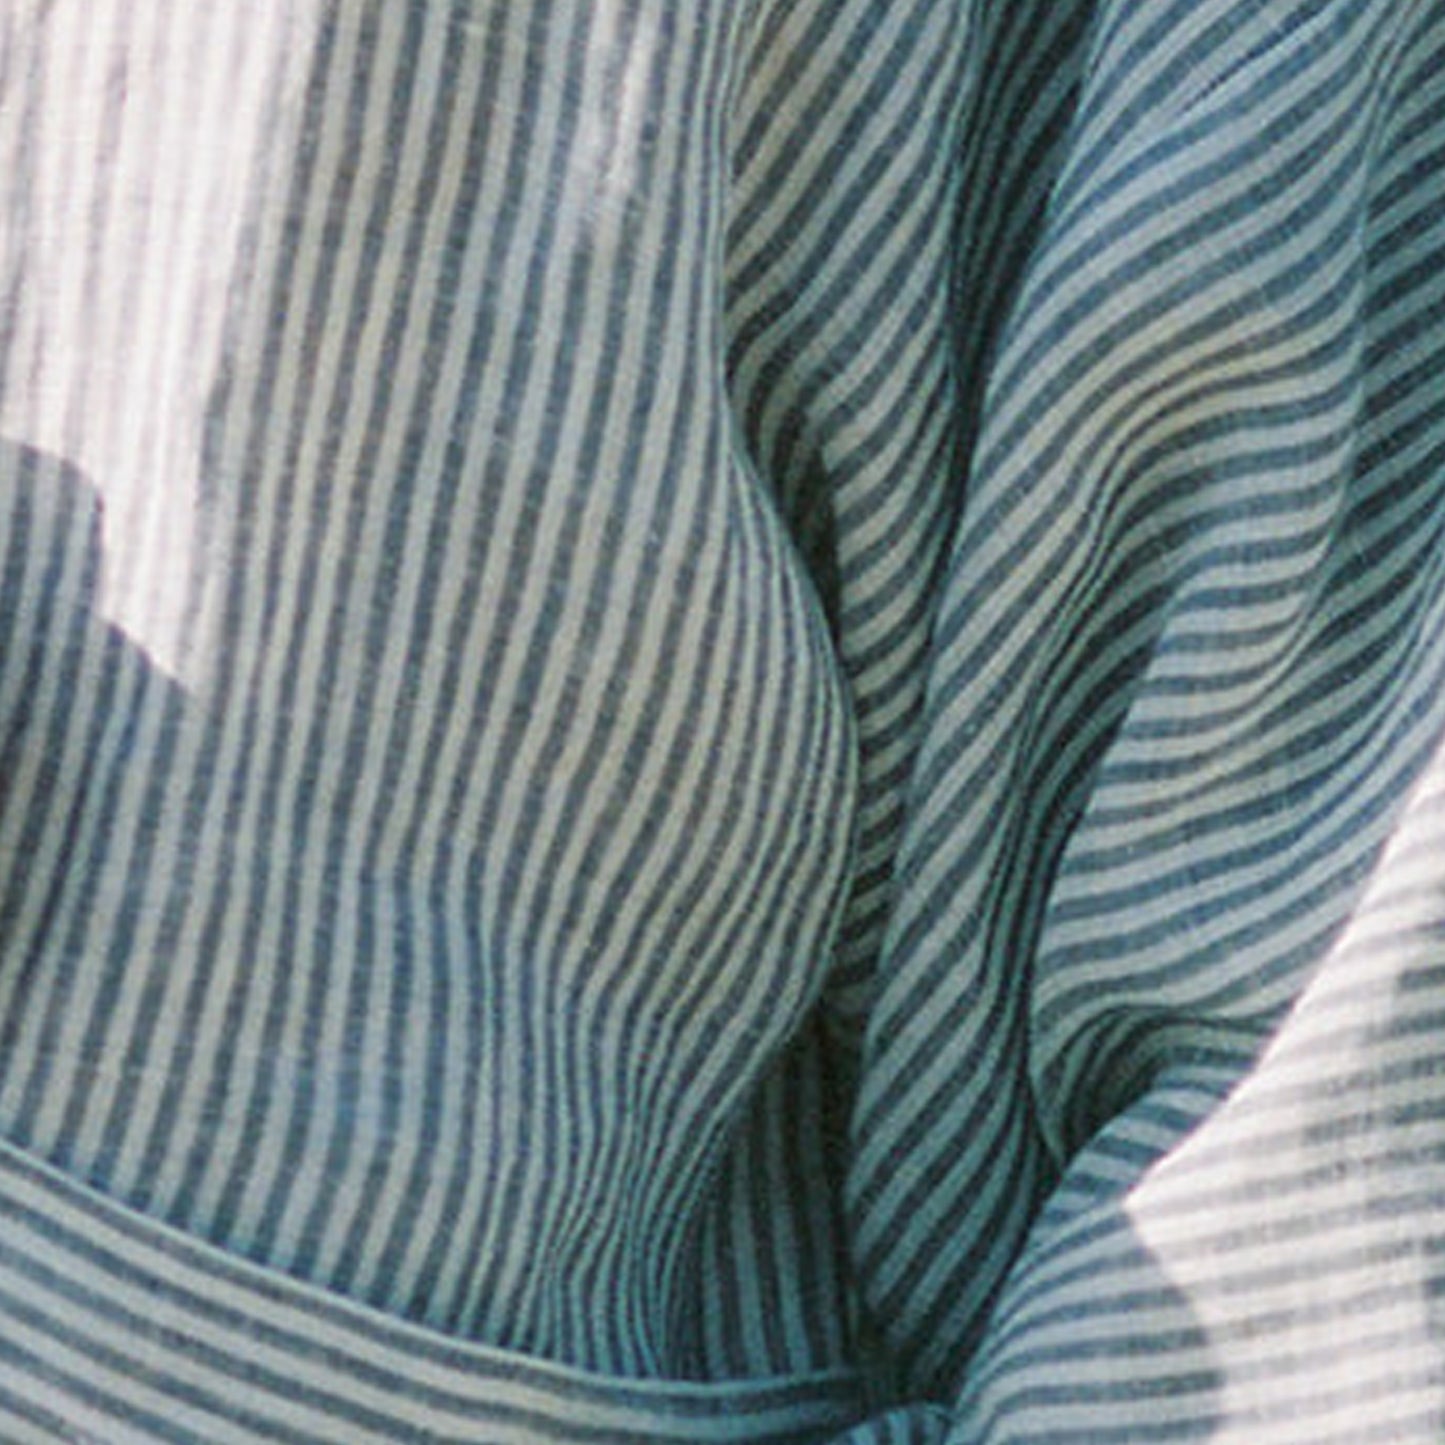 'Baillie' Unisex Linen Baby Trousers